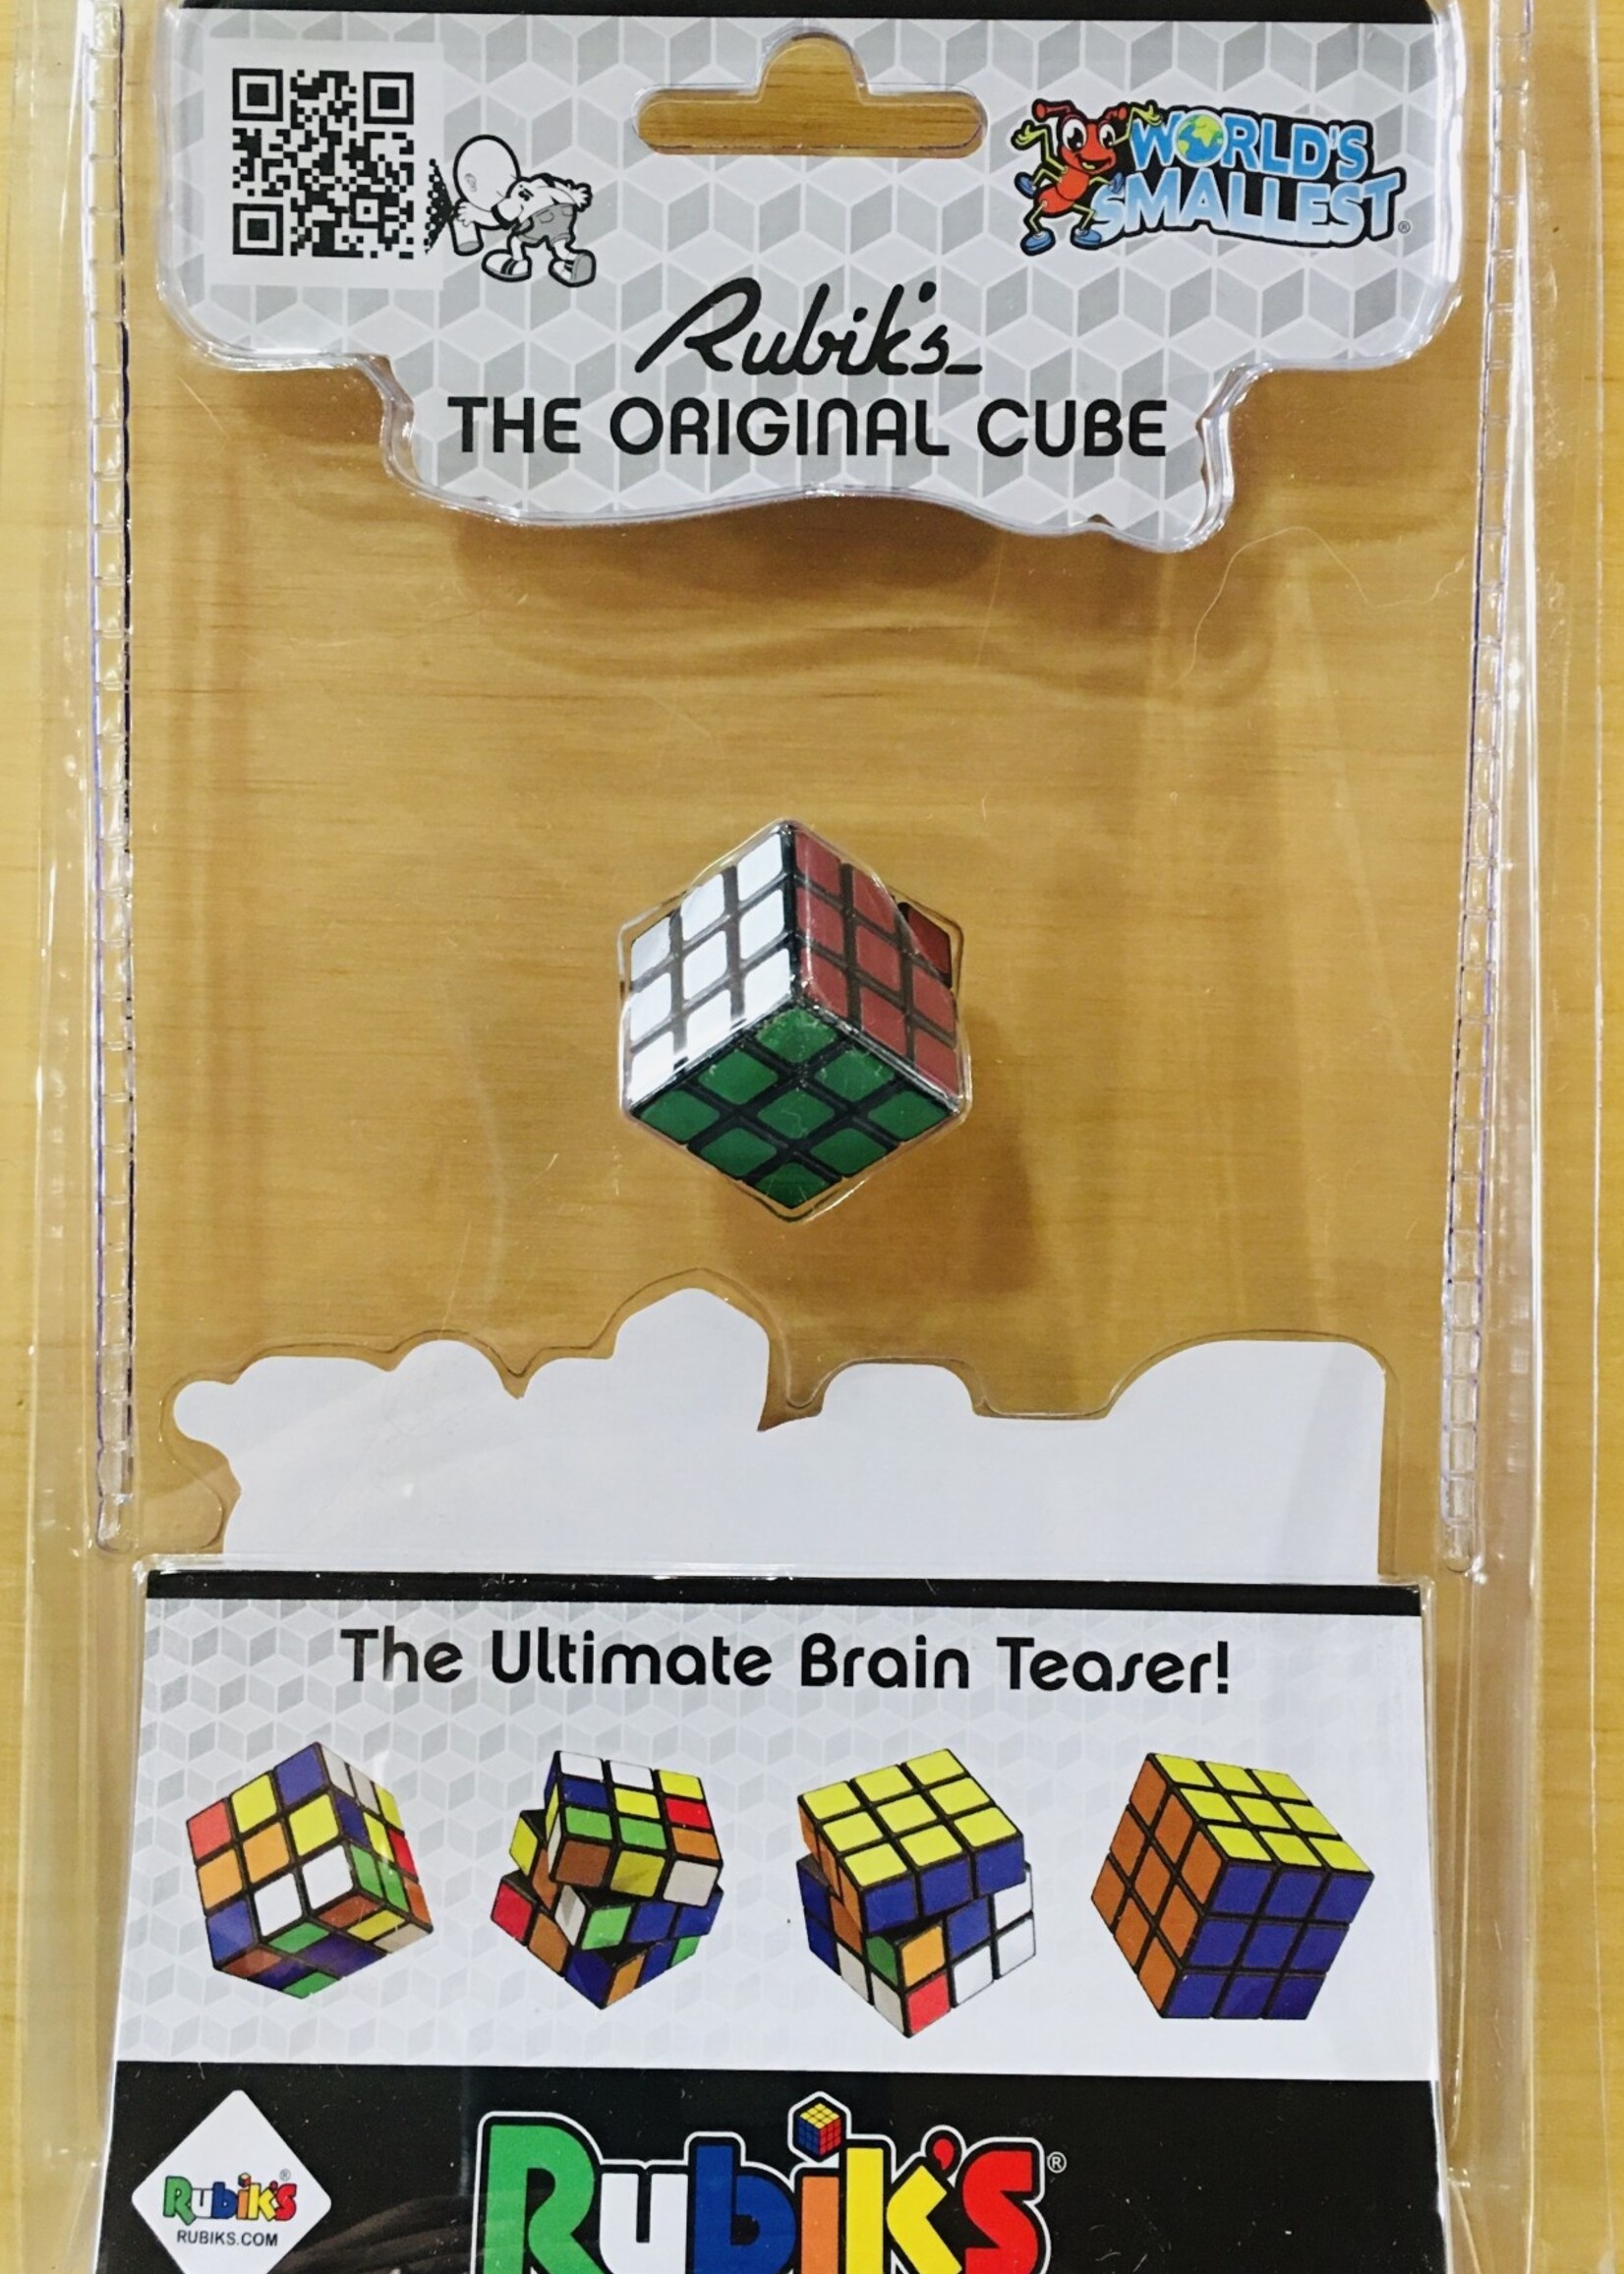 Worlds Smallest Rubik's